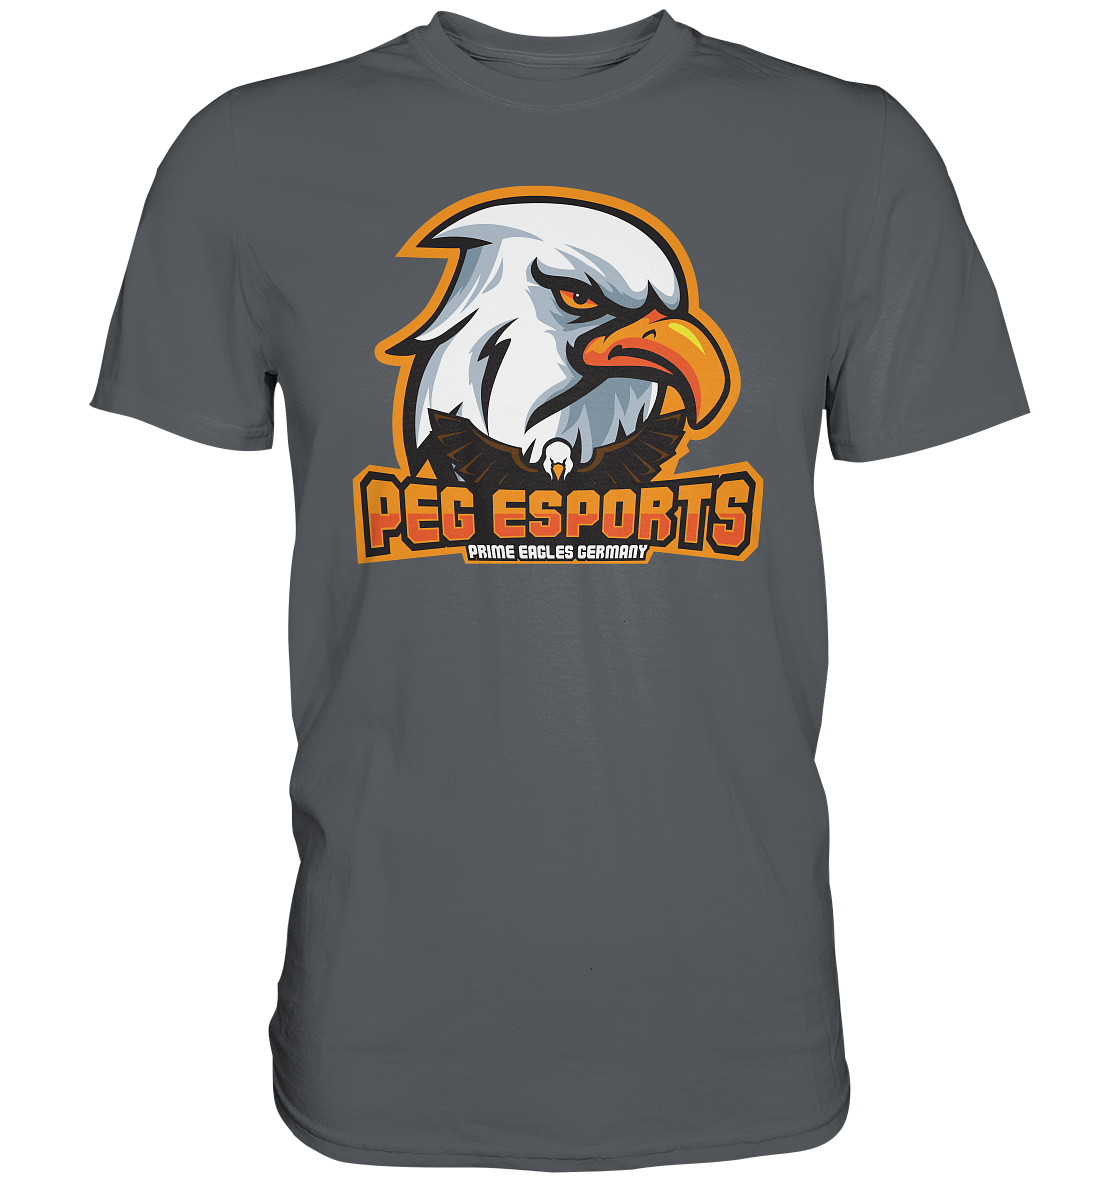 PEG ESPORTS - Basic Shirt